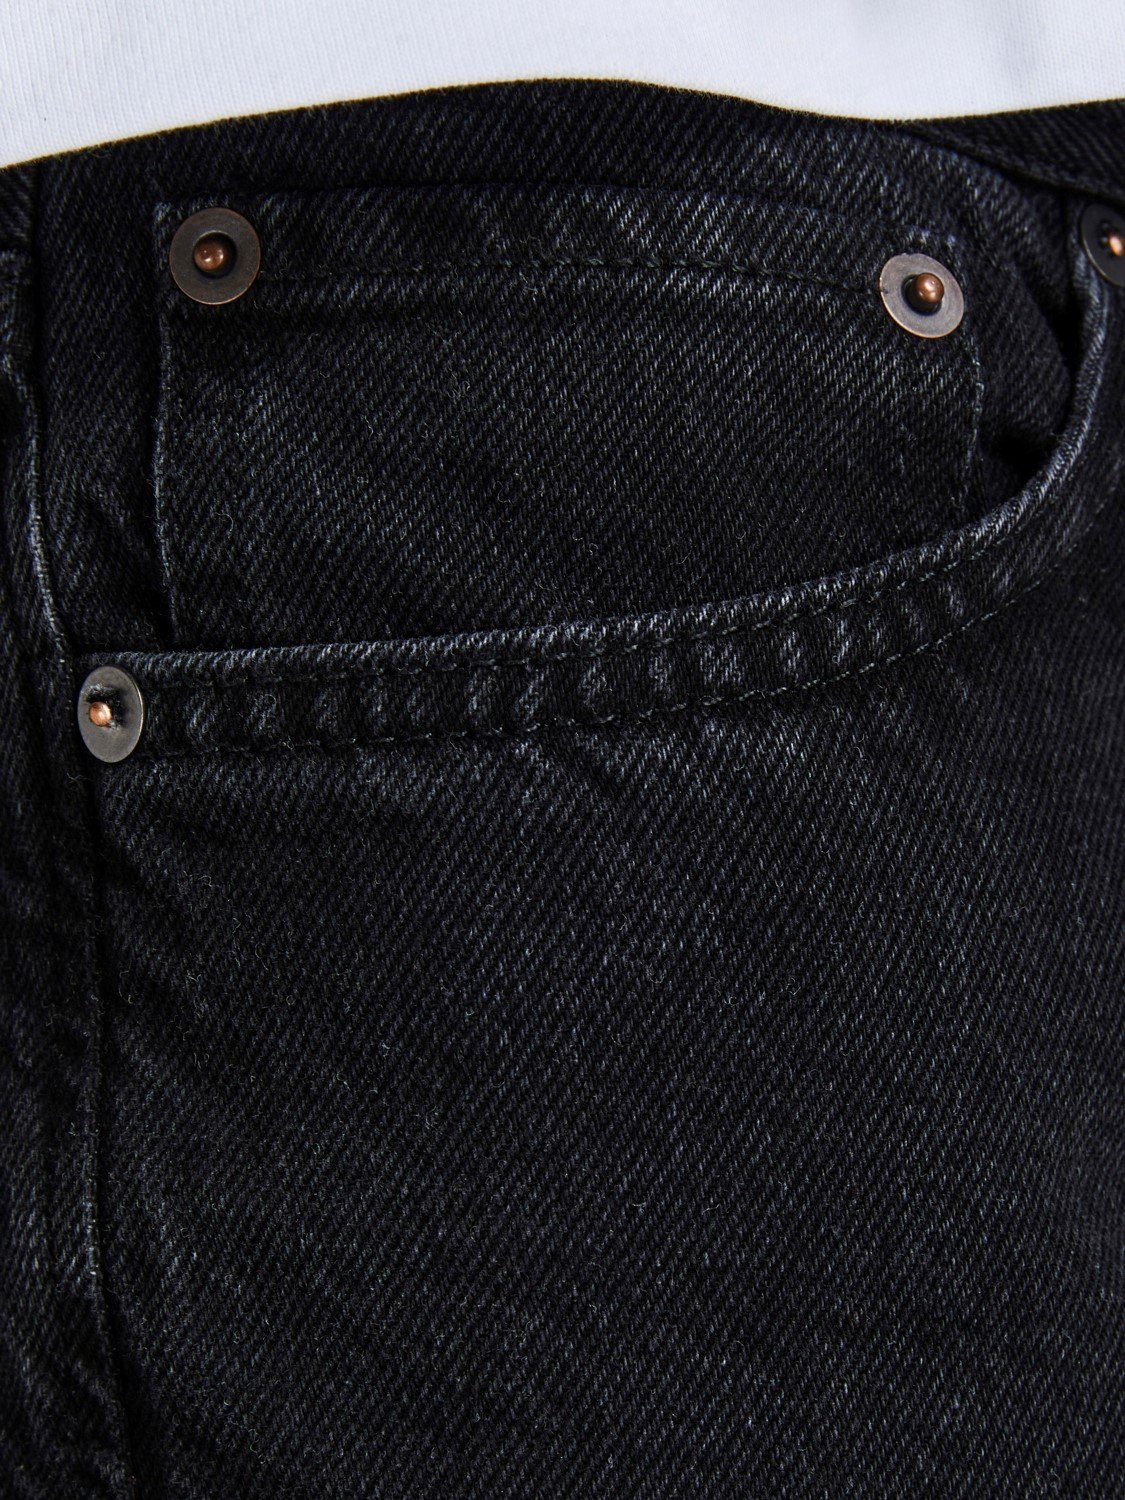 Jack & Jones Relax-fit-Jeans 981 CJ aus JJORIGINAL 100% JJICHRIS Baumwolle